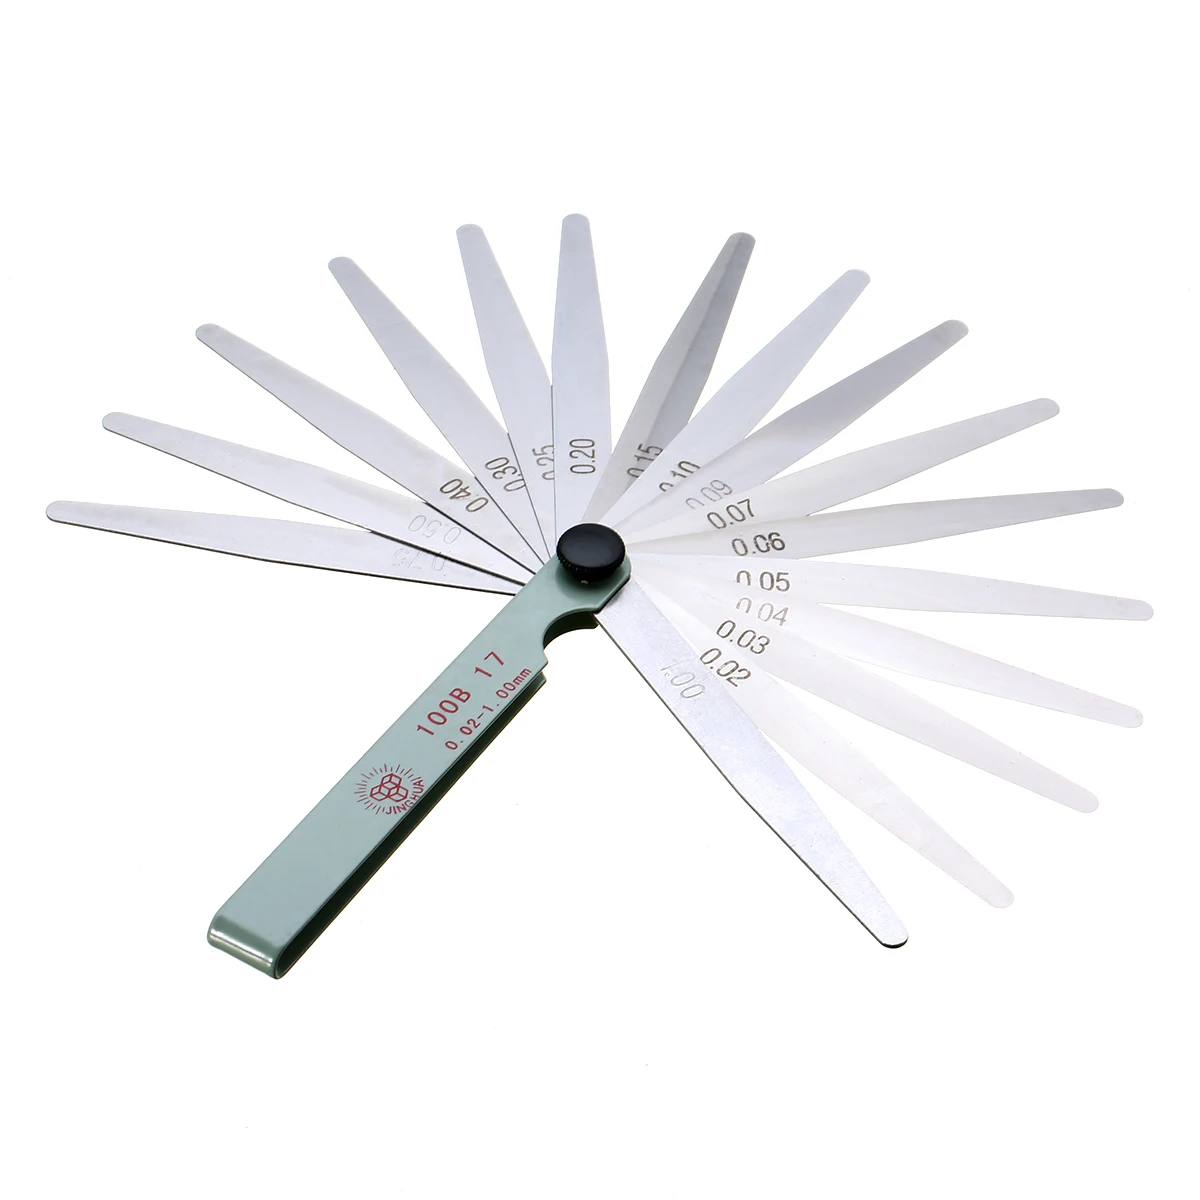 100mm 0.02- 1.0mm Thickness Metric Feeler Gauge 17 Blades Carbon Steel Gauge for Spark Plug Gap Valve Tappets Measure Tool